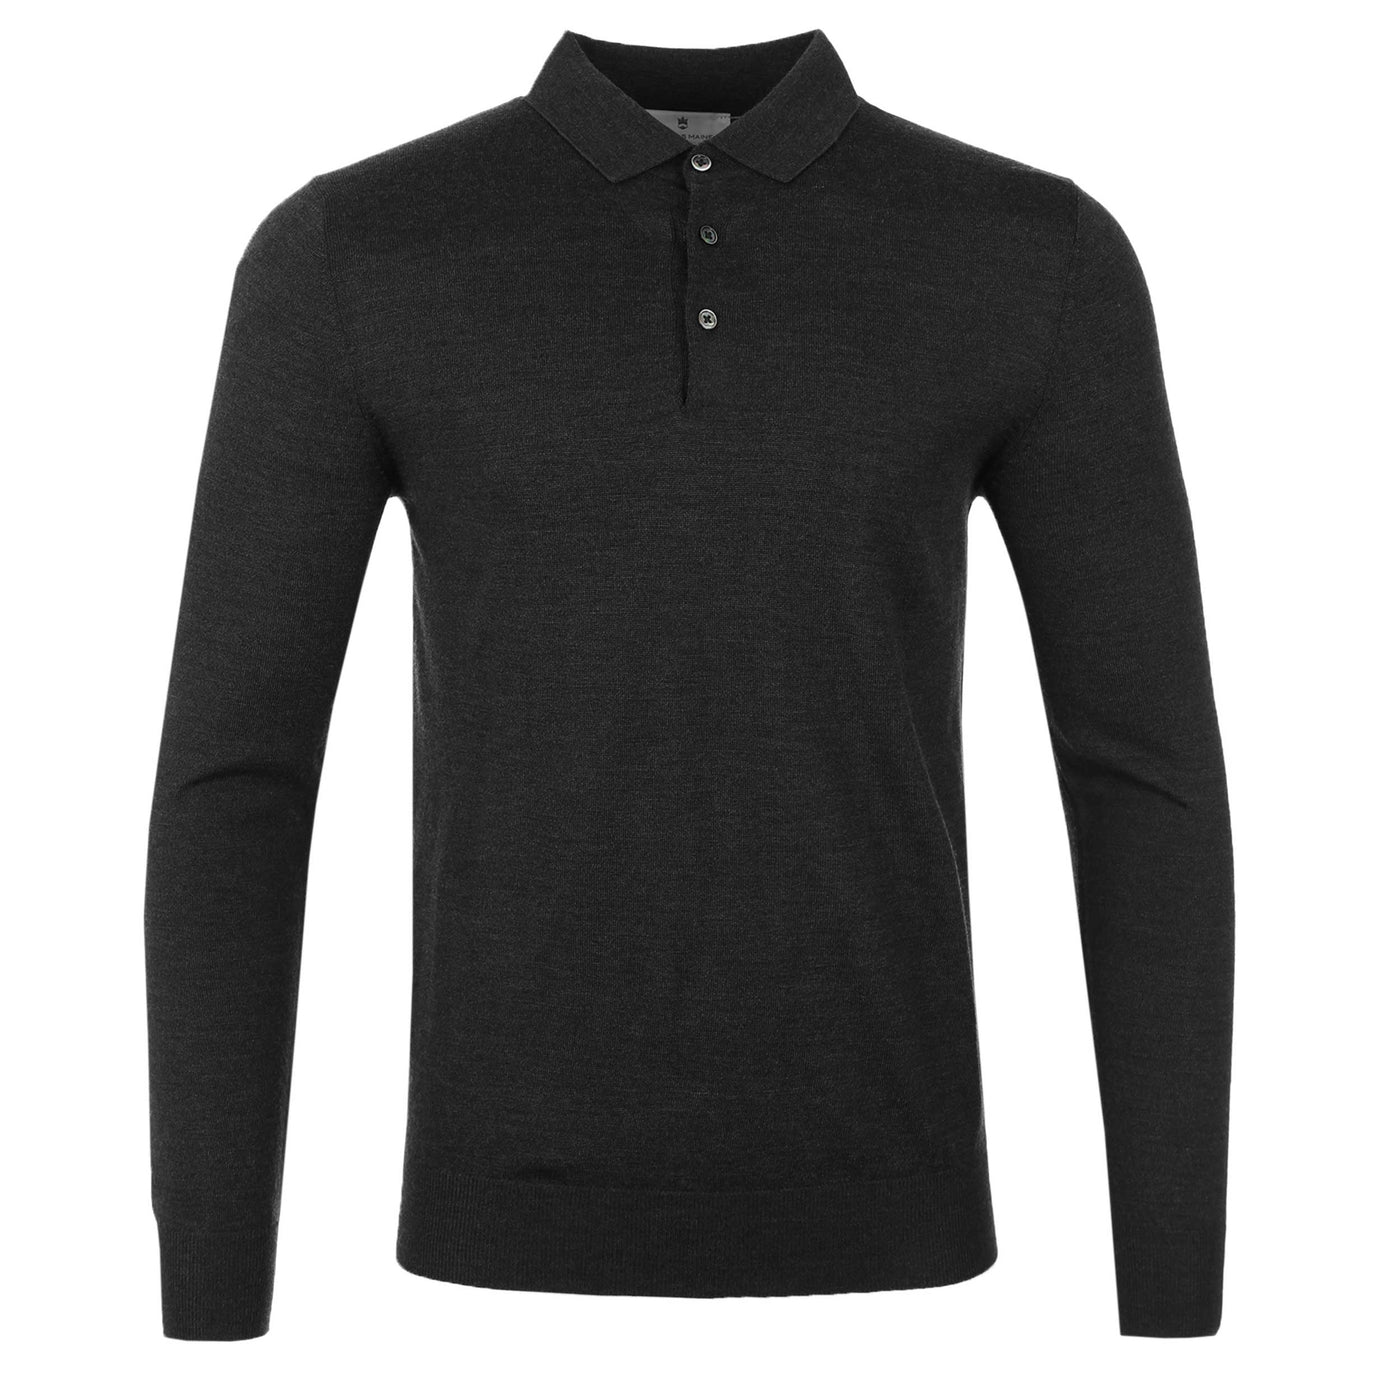 Thomas Maine 3 Button Knit Polo Shirt in Black